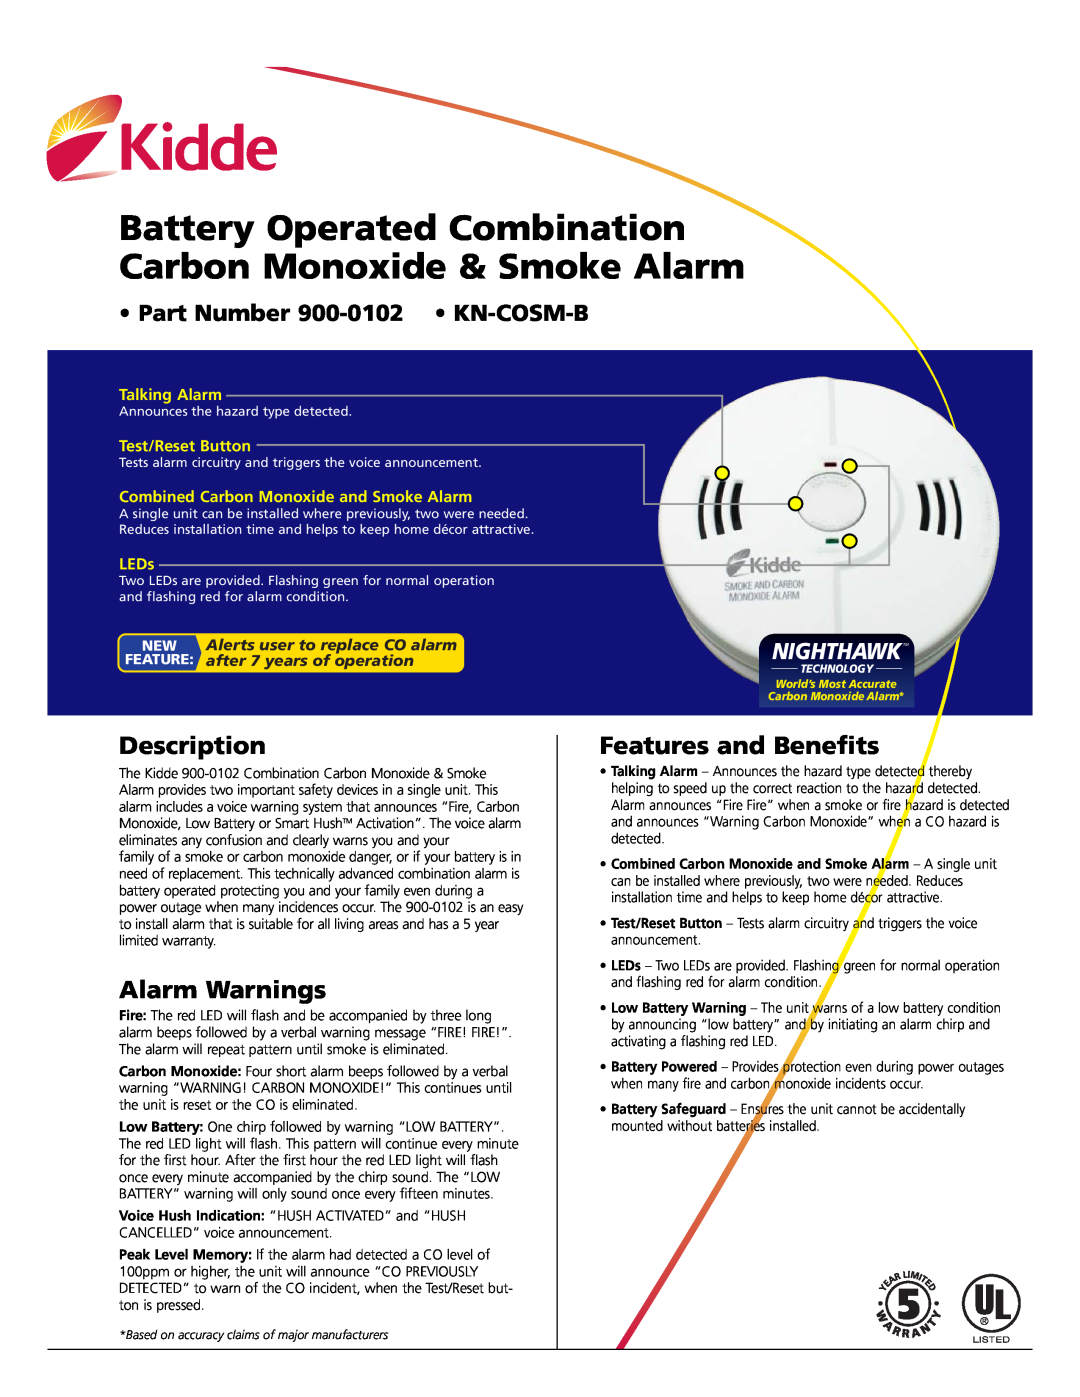 Kidde KN-COSM-B warranty Description, Alarm Warnings, Features and Benefits, Talking Alarm, Test/Reset Button, LEDs 